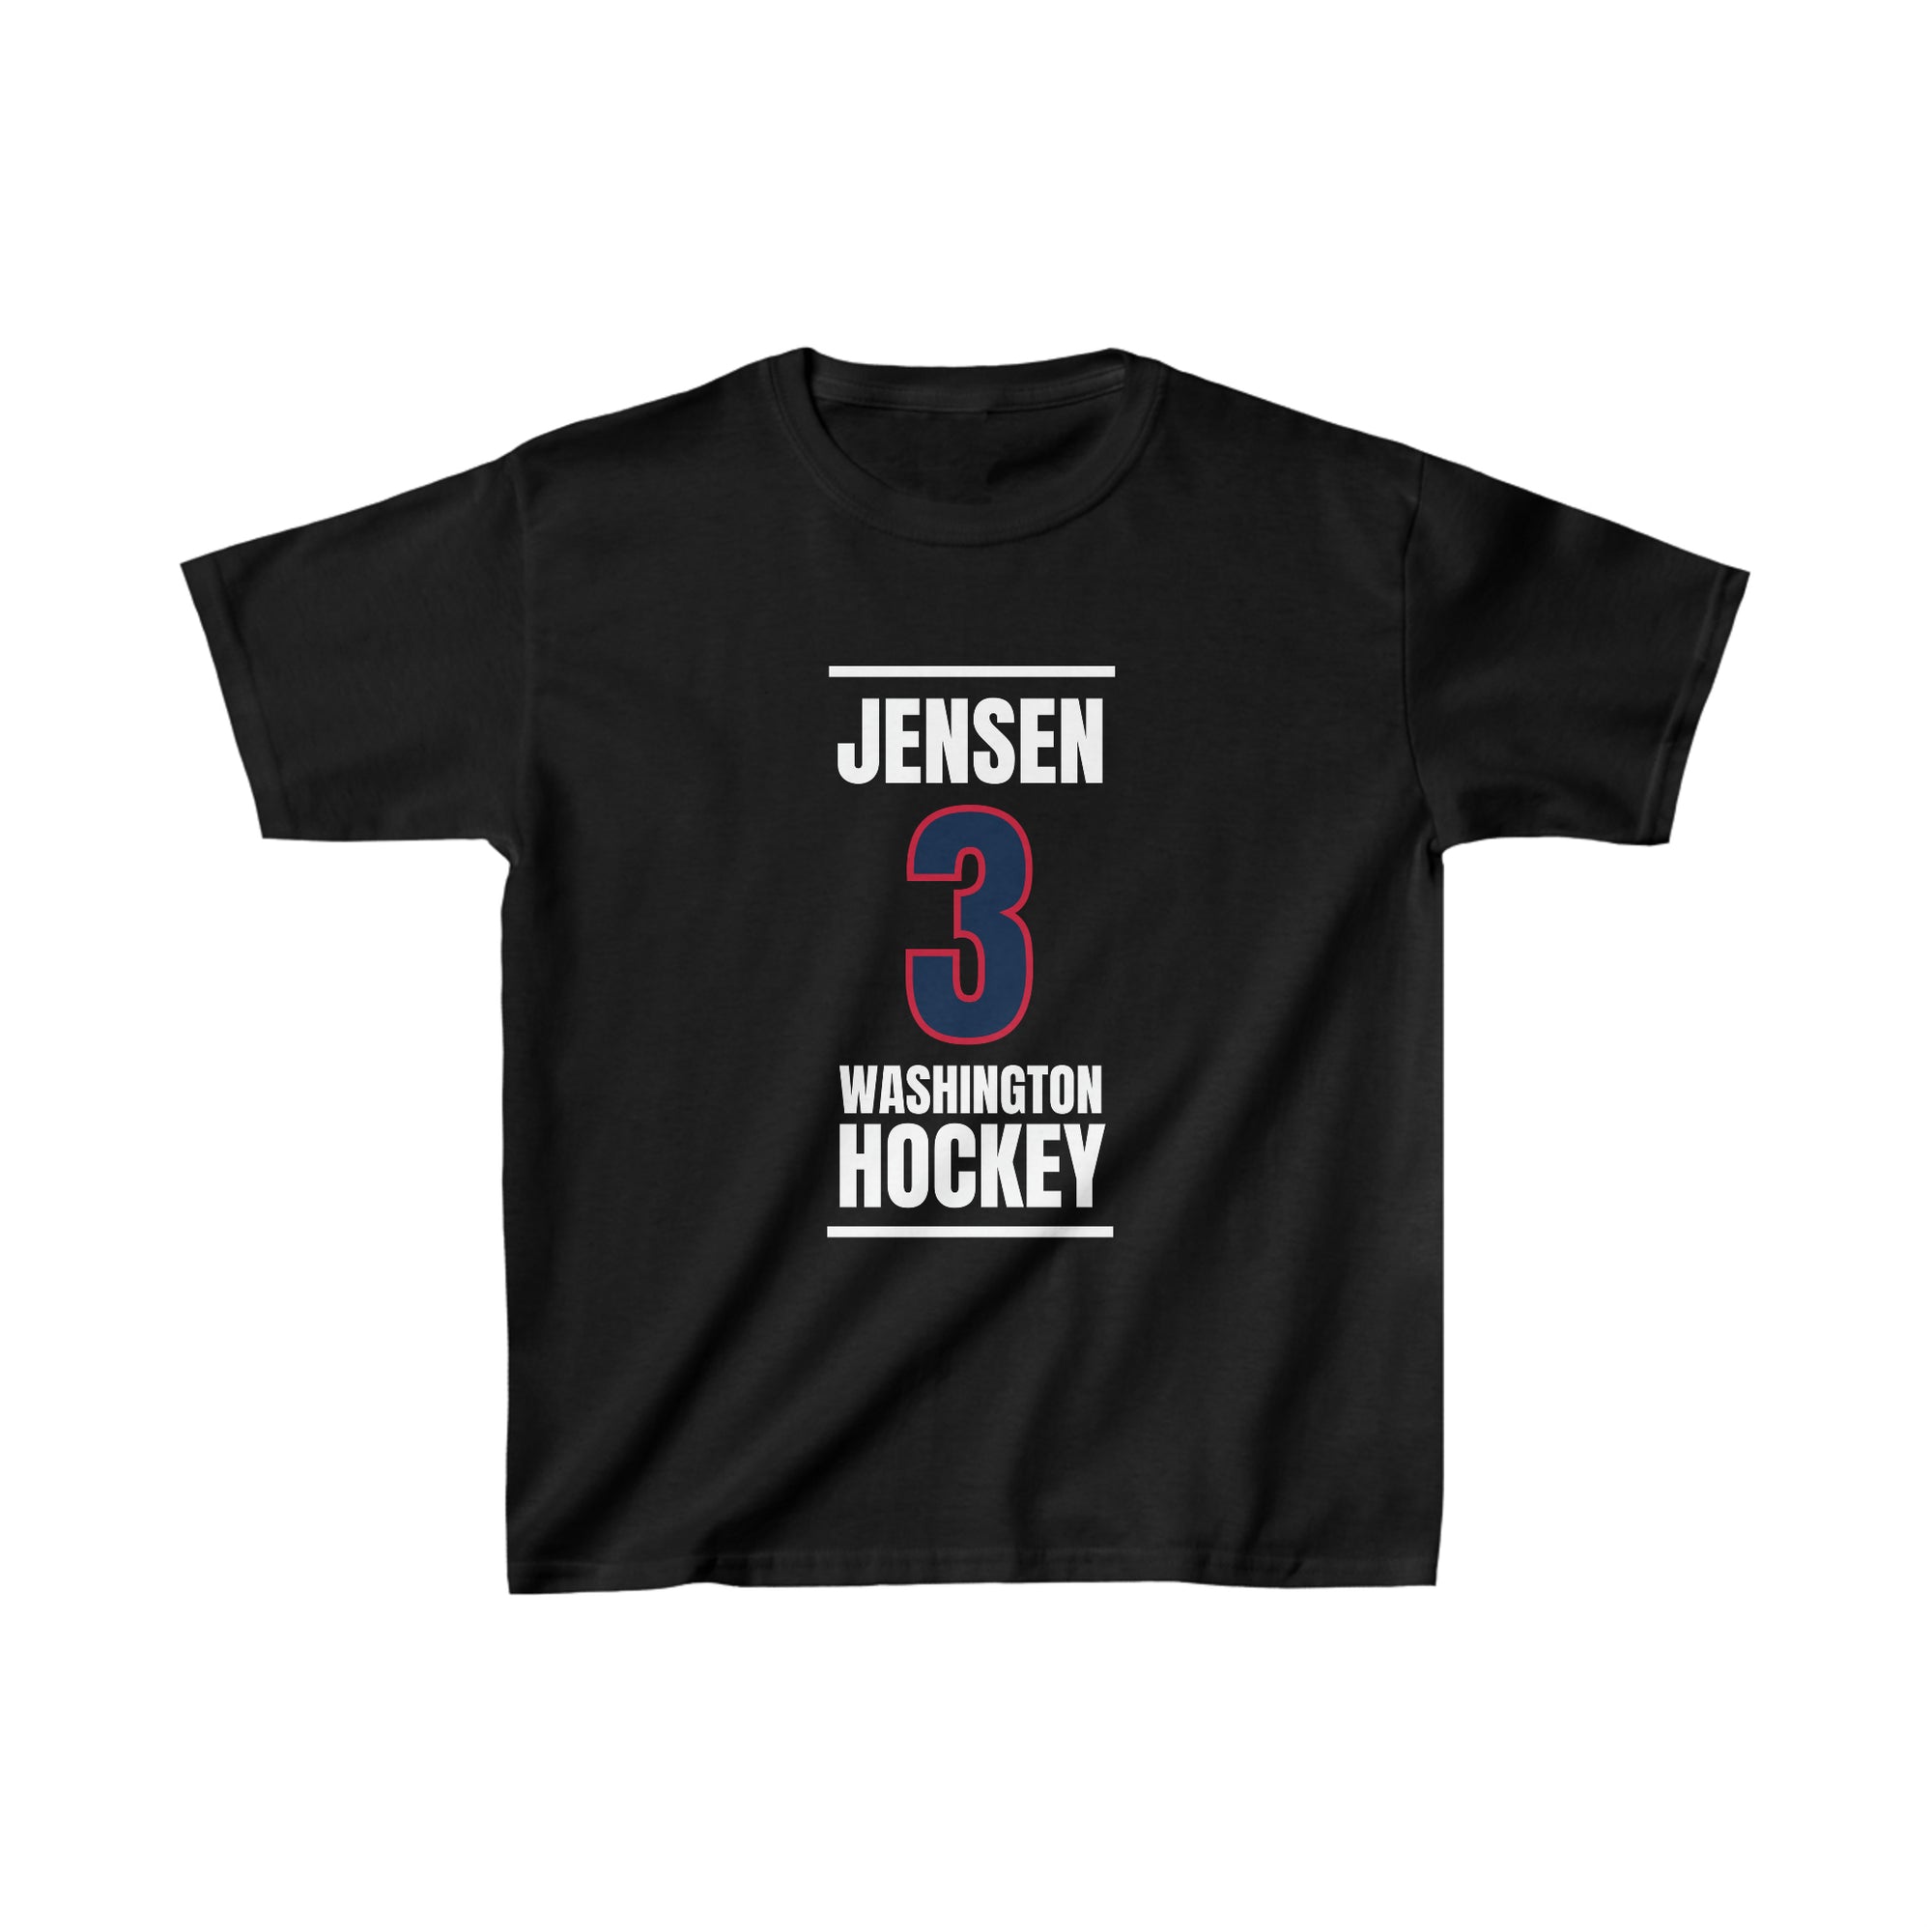 Jensen 3 Washington Hockey Navy Vertical Design Kids Tee